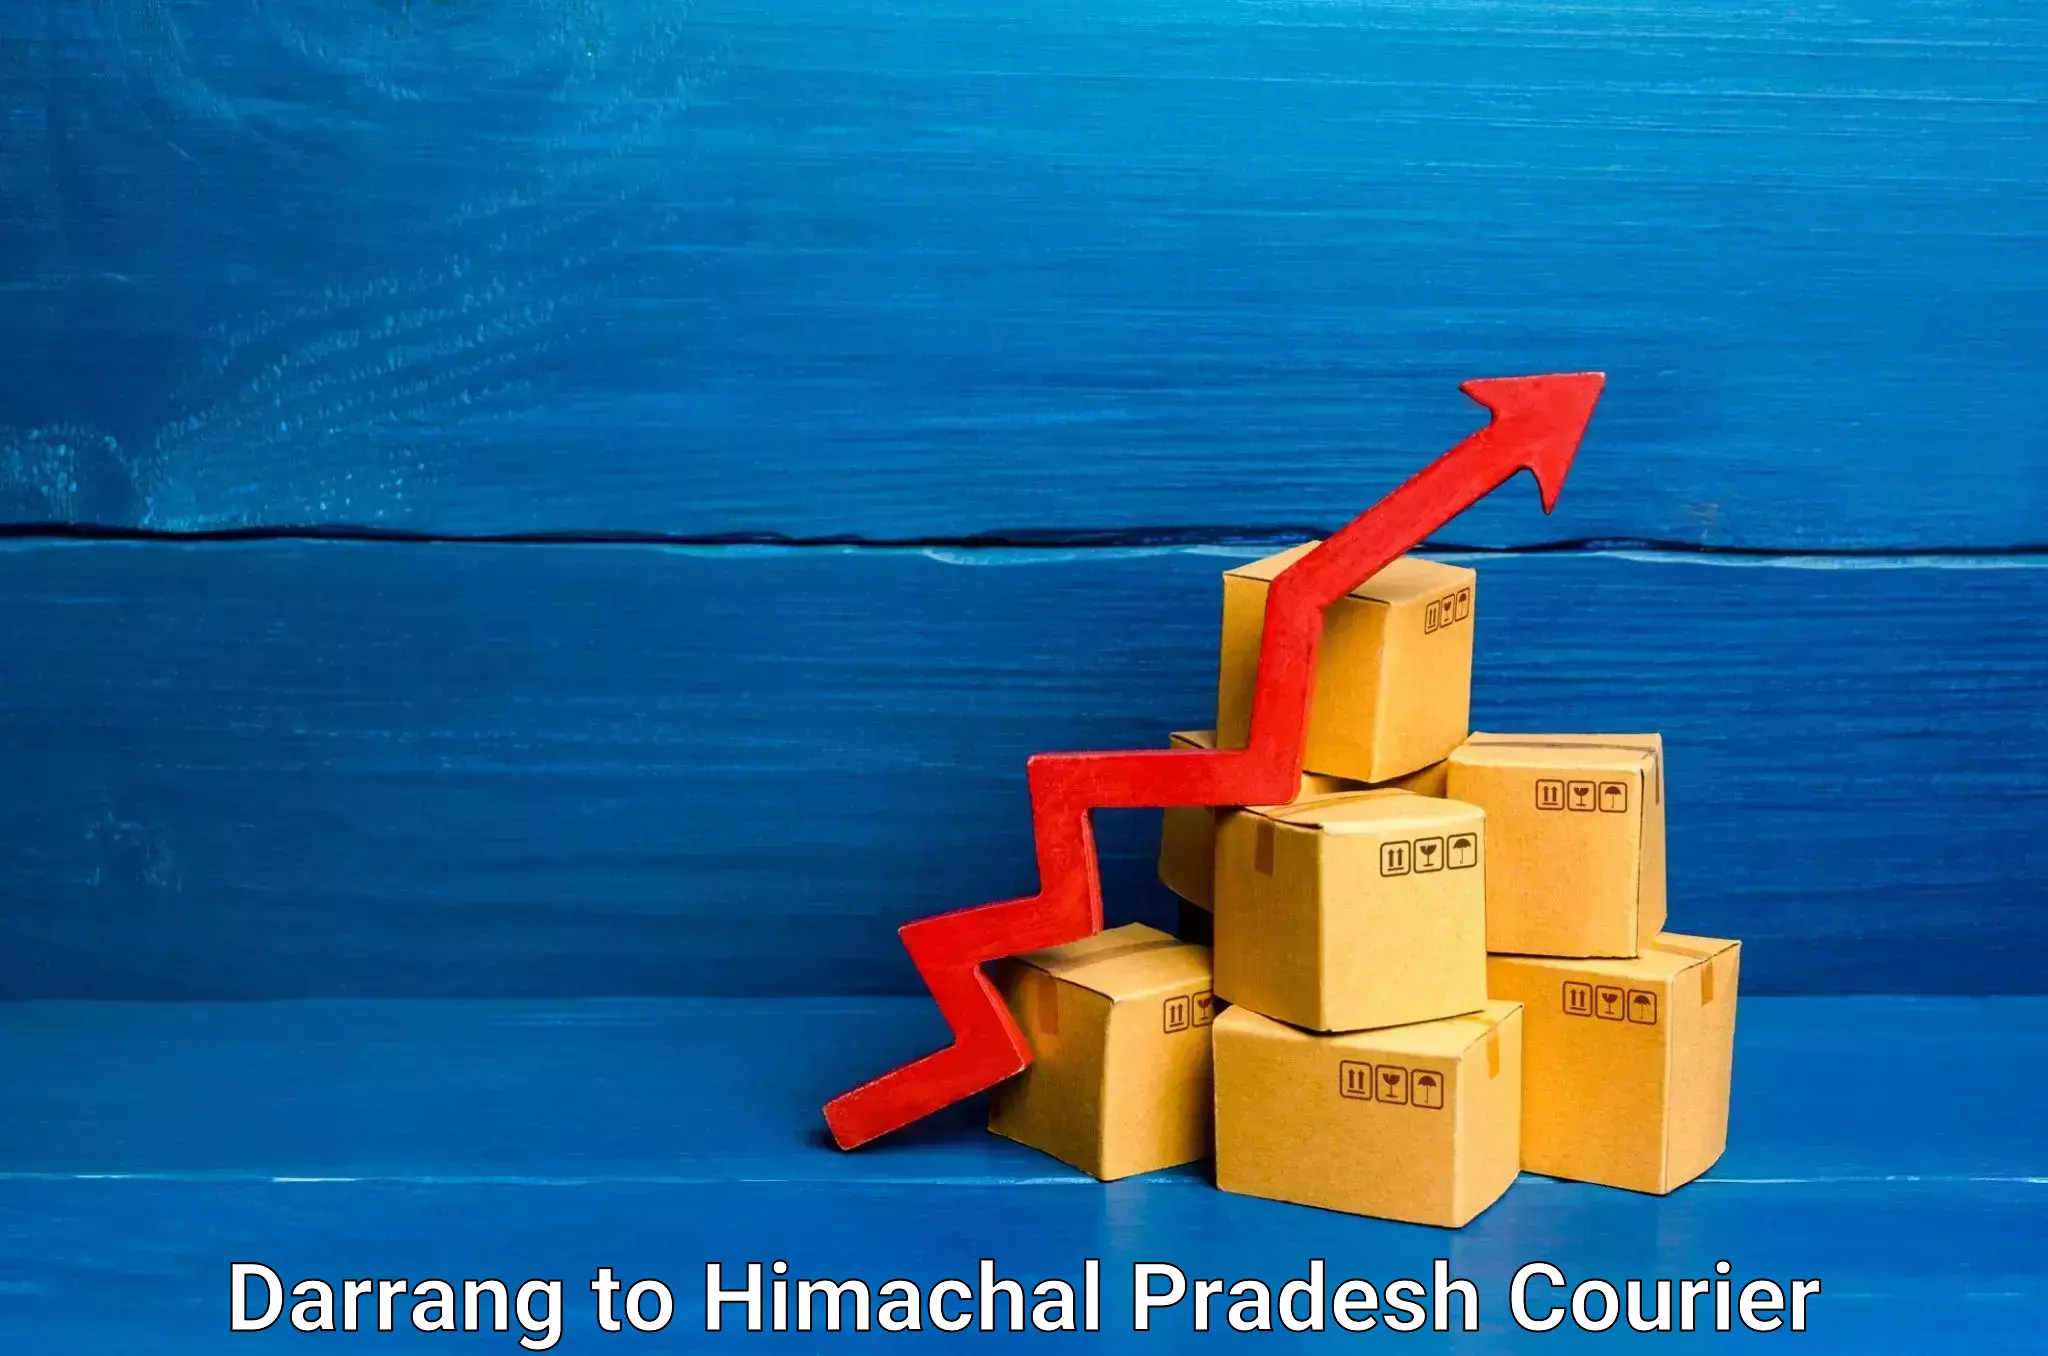 Global logistics network Darrang to Himachal Pradesh